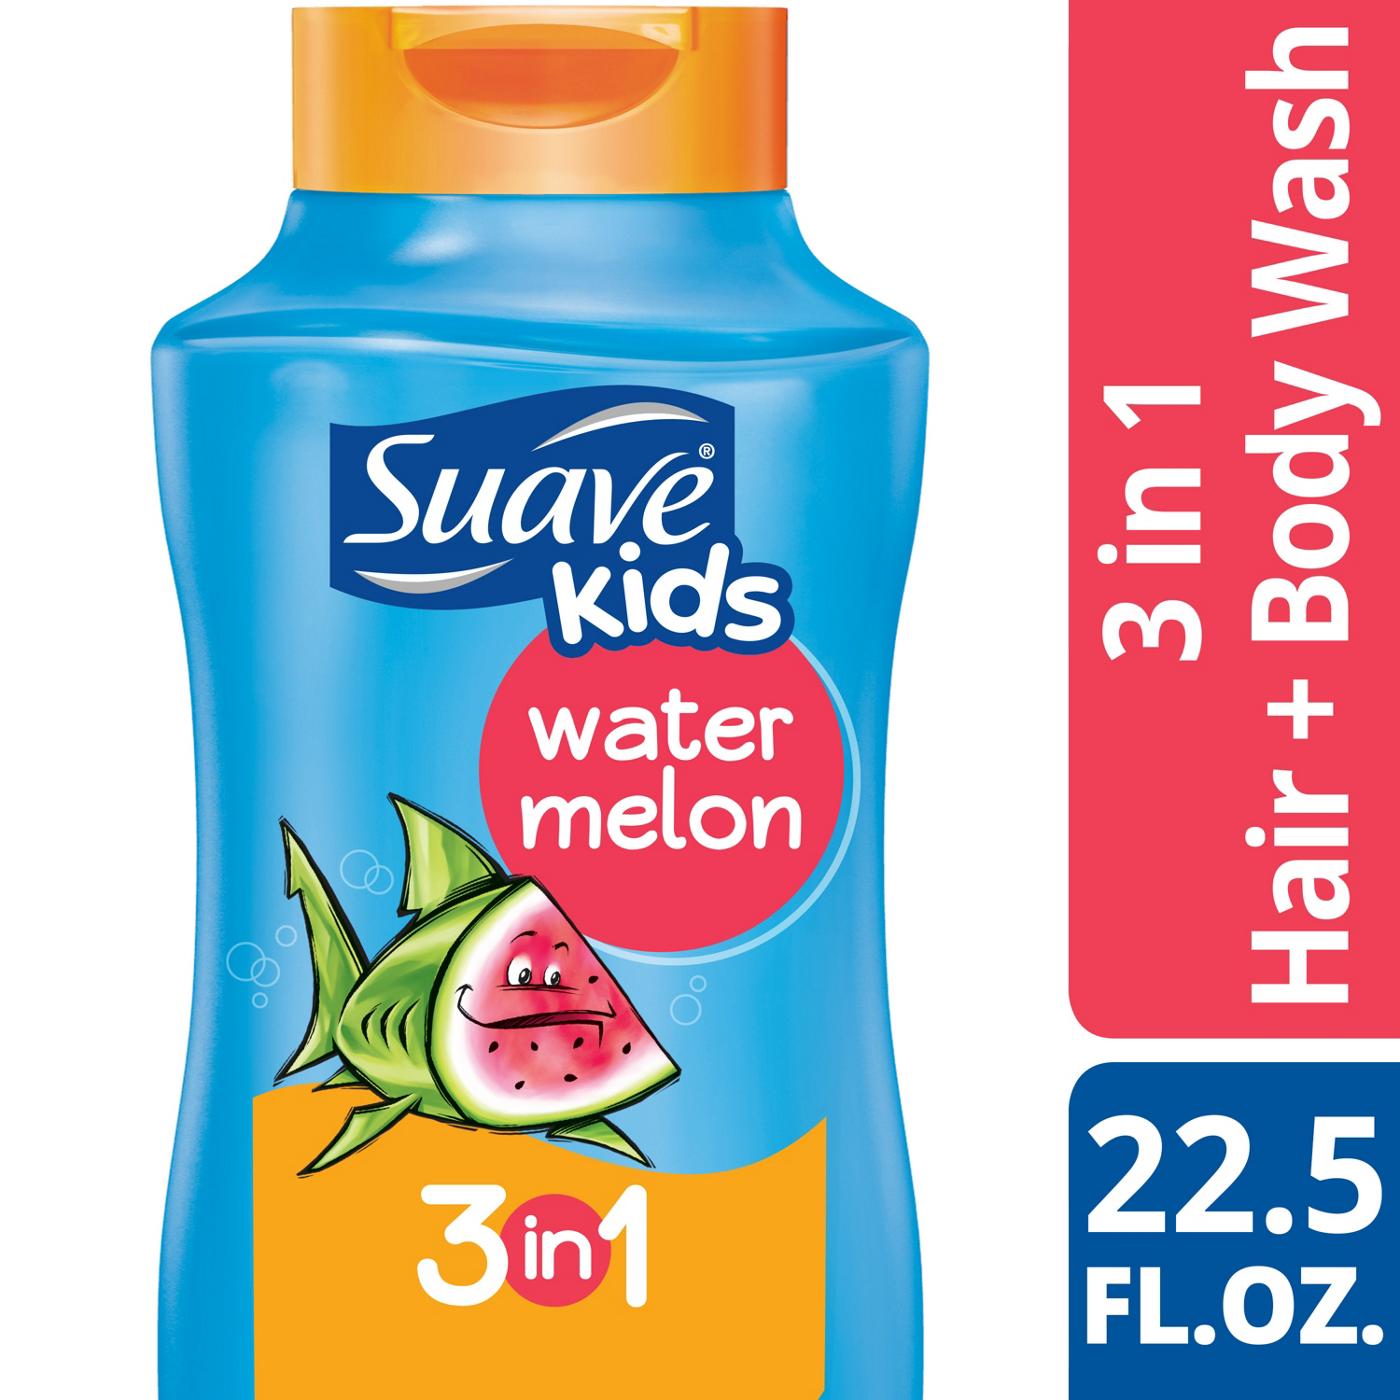 Suave Kids Watermelon 3 in 1 Shampoo Conditioner Body Wash; image 3 of 3